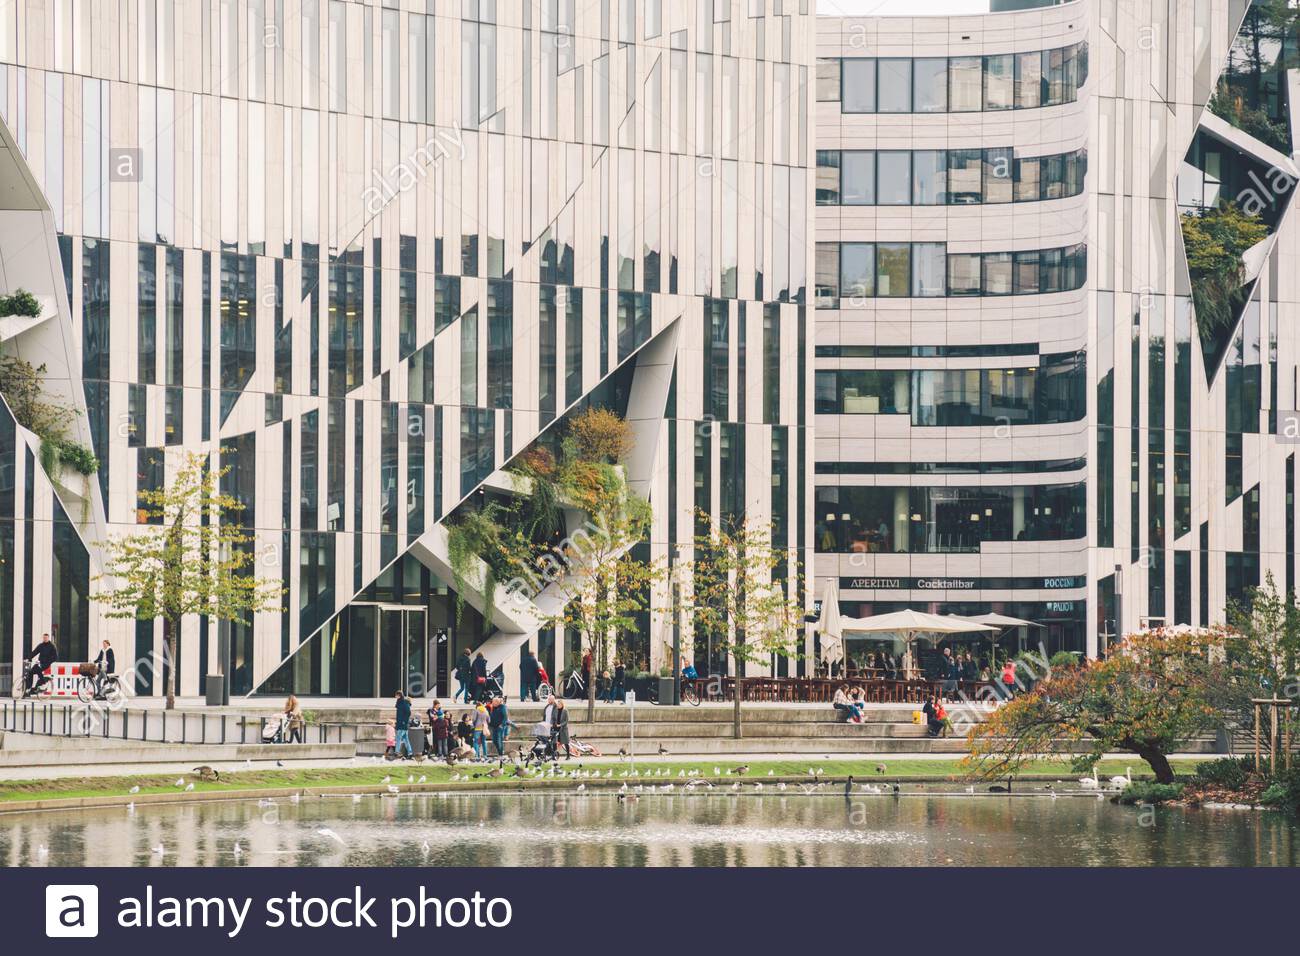 october 27 2018 germany d sseldorf north rhine building plex known as k bogen city center architecture modern art deco design 2AGJ5TH